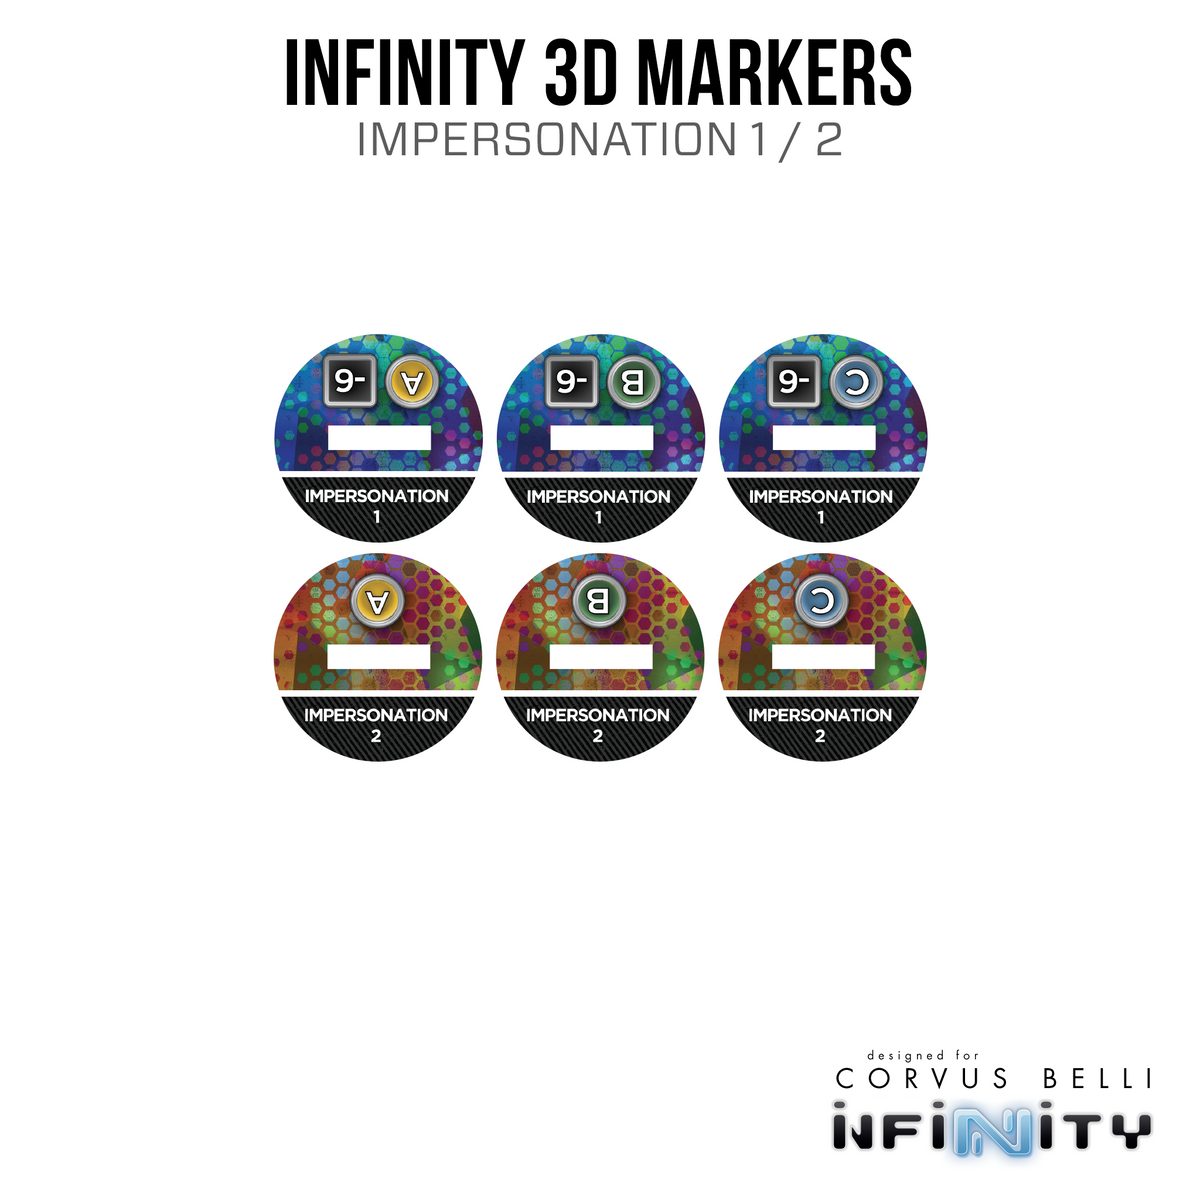 Marcadores 3D Infinity: Hussein Al-Djabel (2 imitaciones de 25 mm)